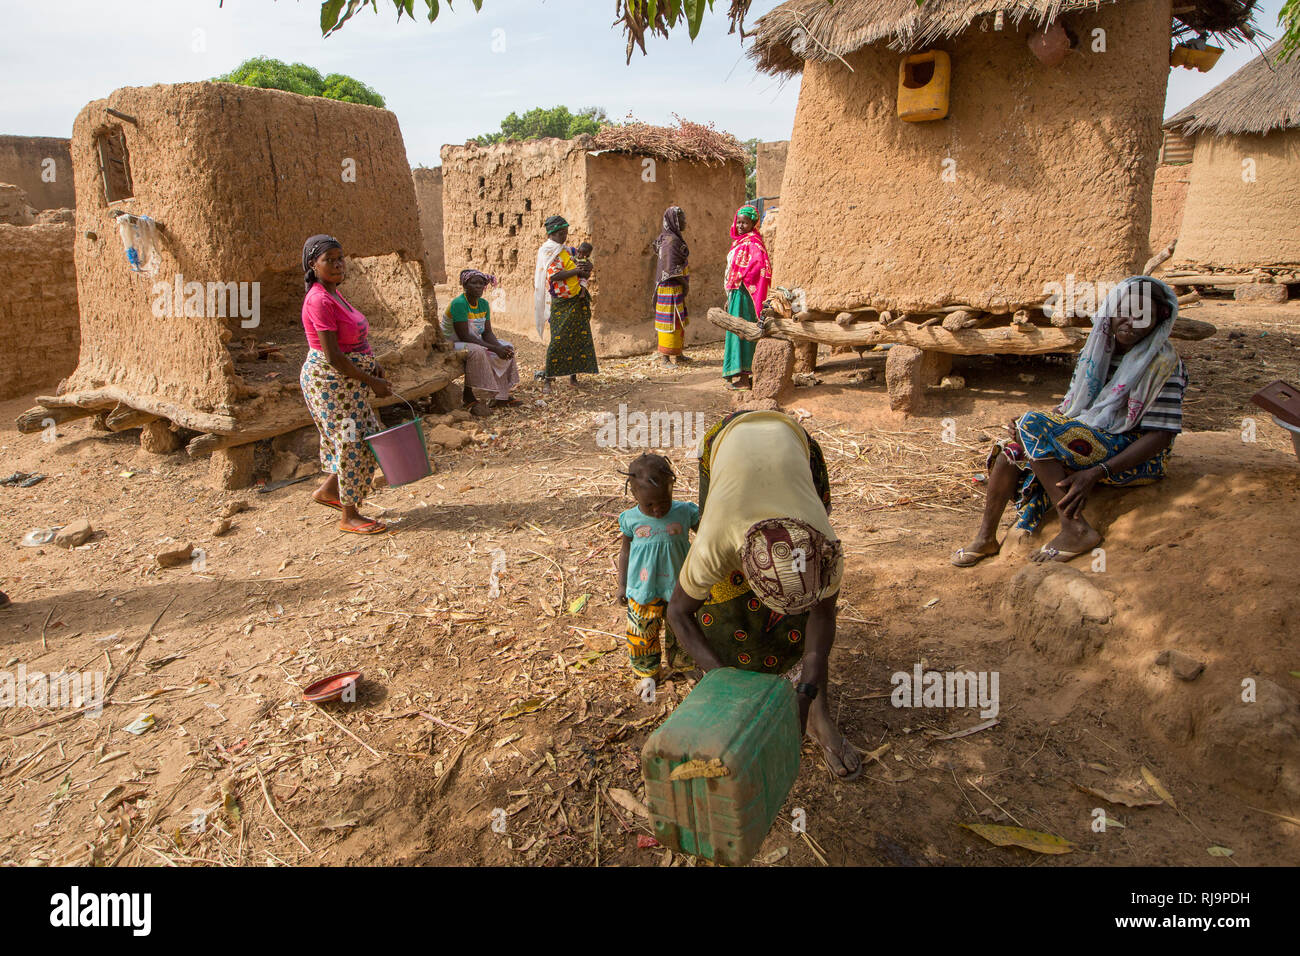 Kisambo Dorf, Yako, Burkina Faso, 28. November 2016; Frauen treffen, das ist das Dorf Markt Garten zu gehen. Stockfoto